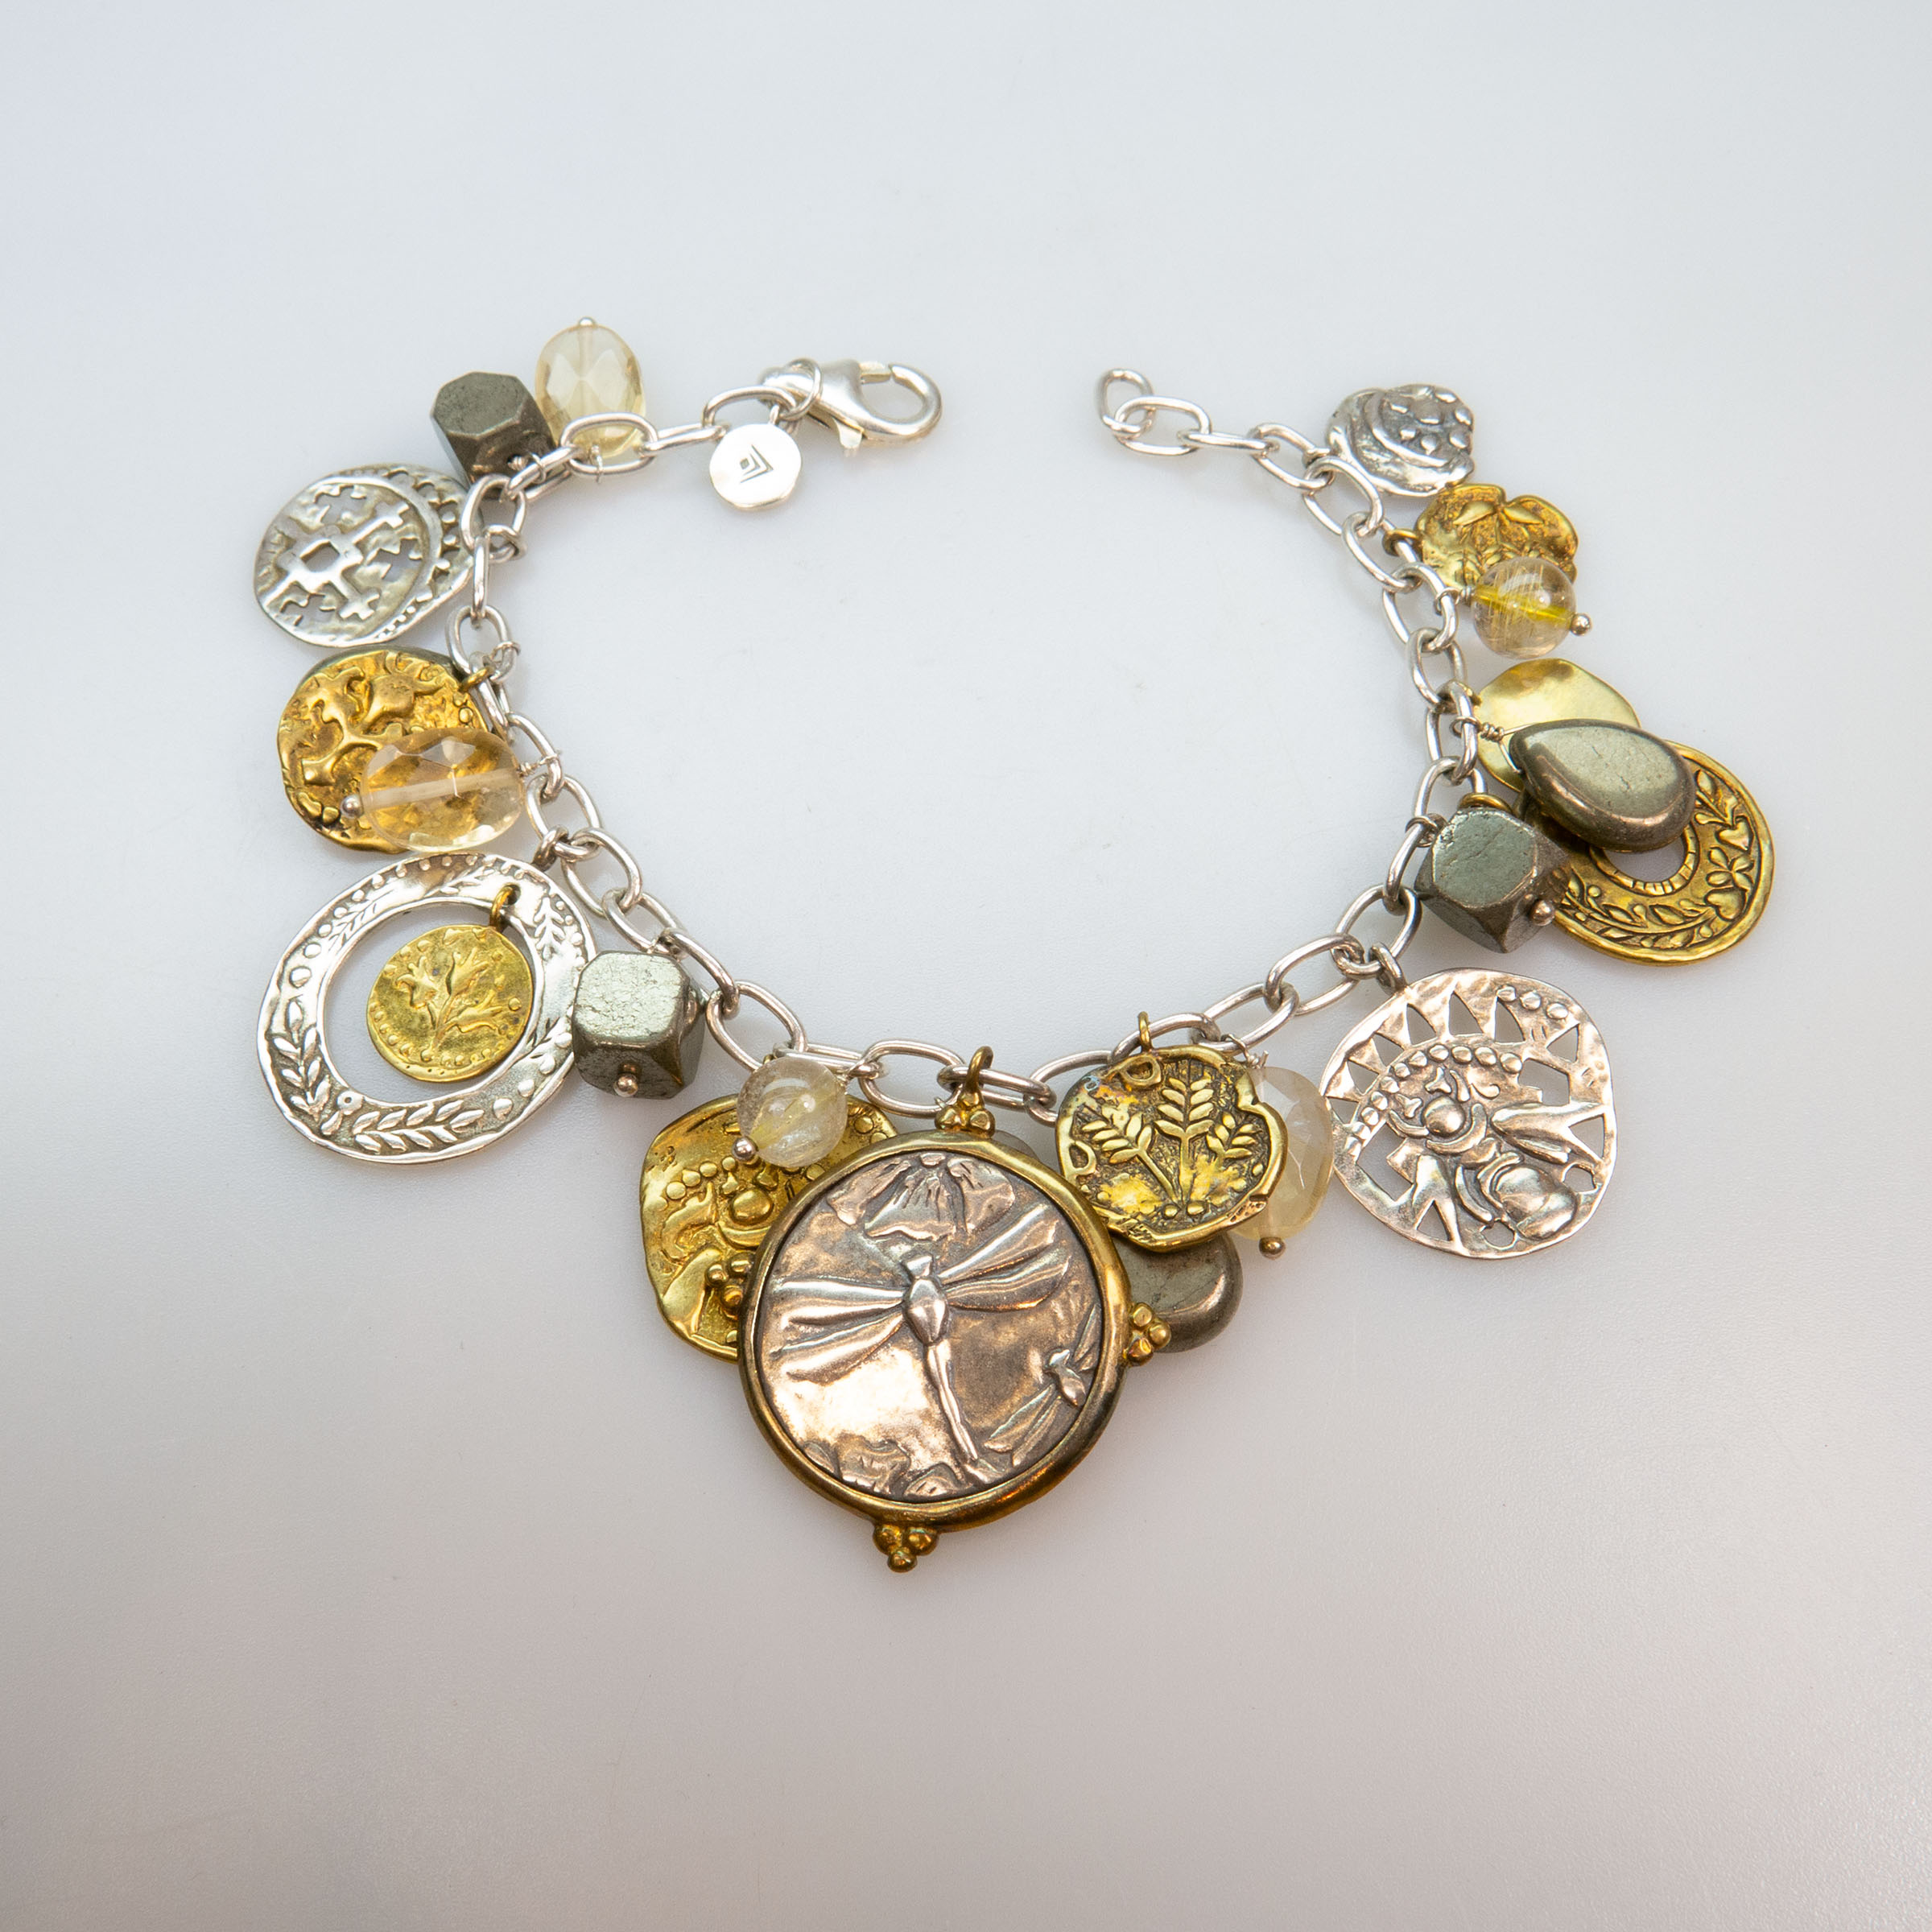 Silpada Sterling Silver Bracelet And Necklace